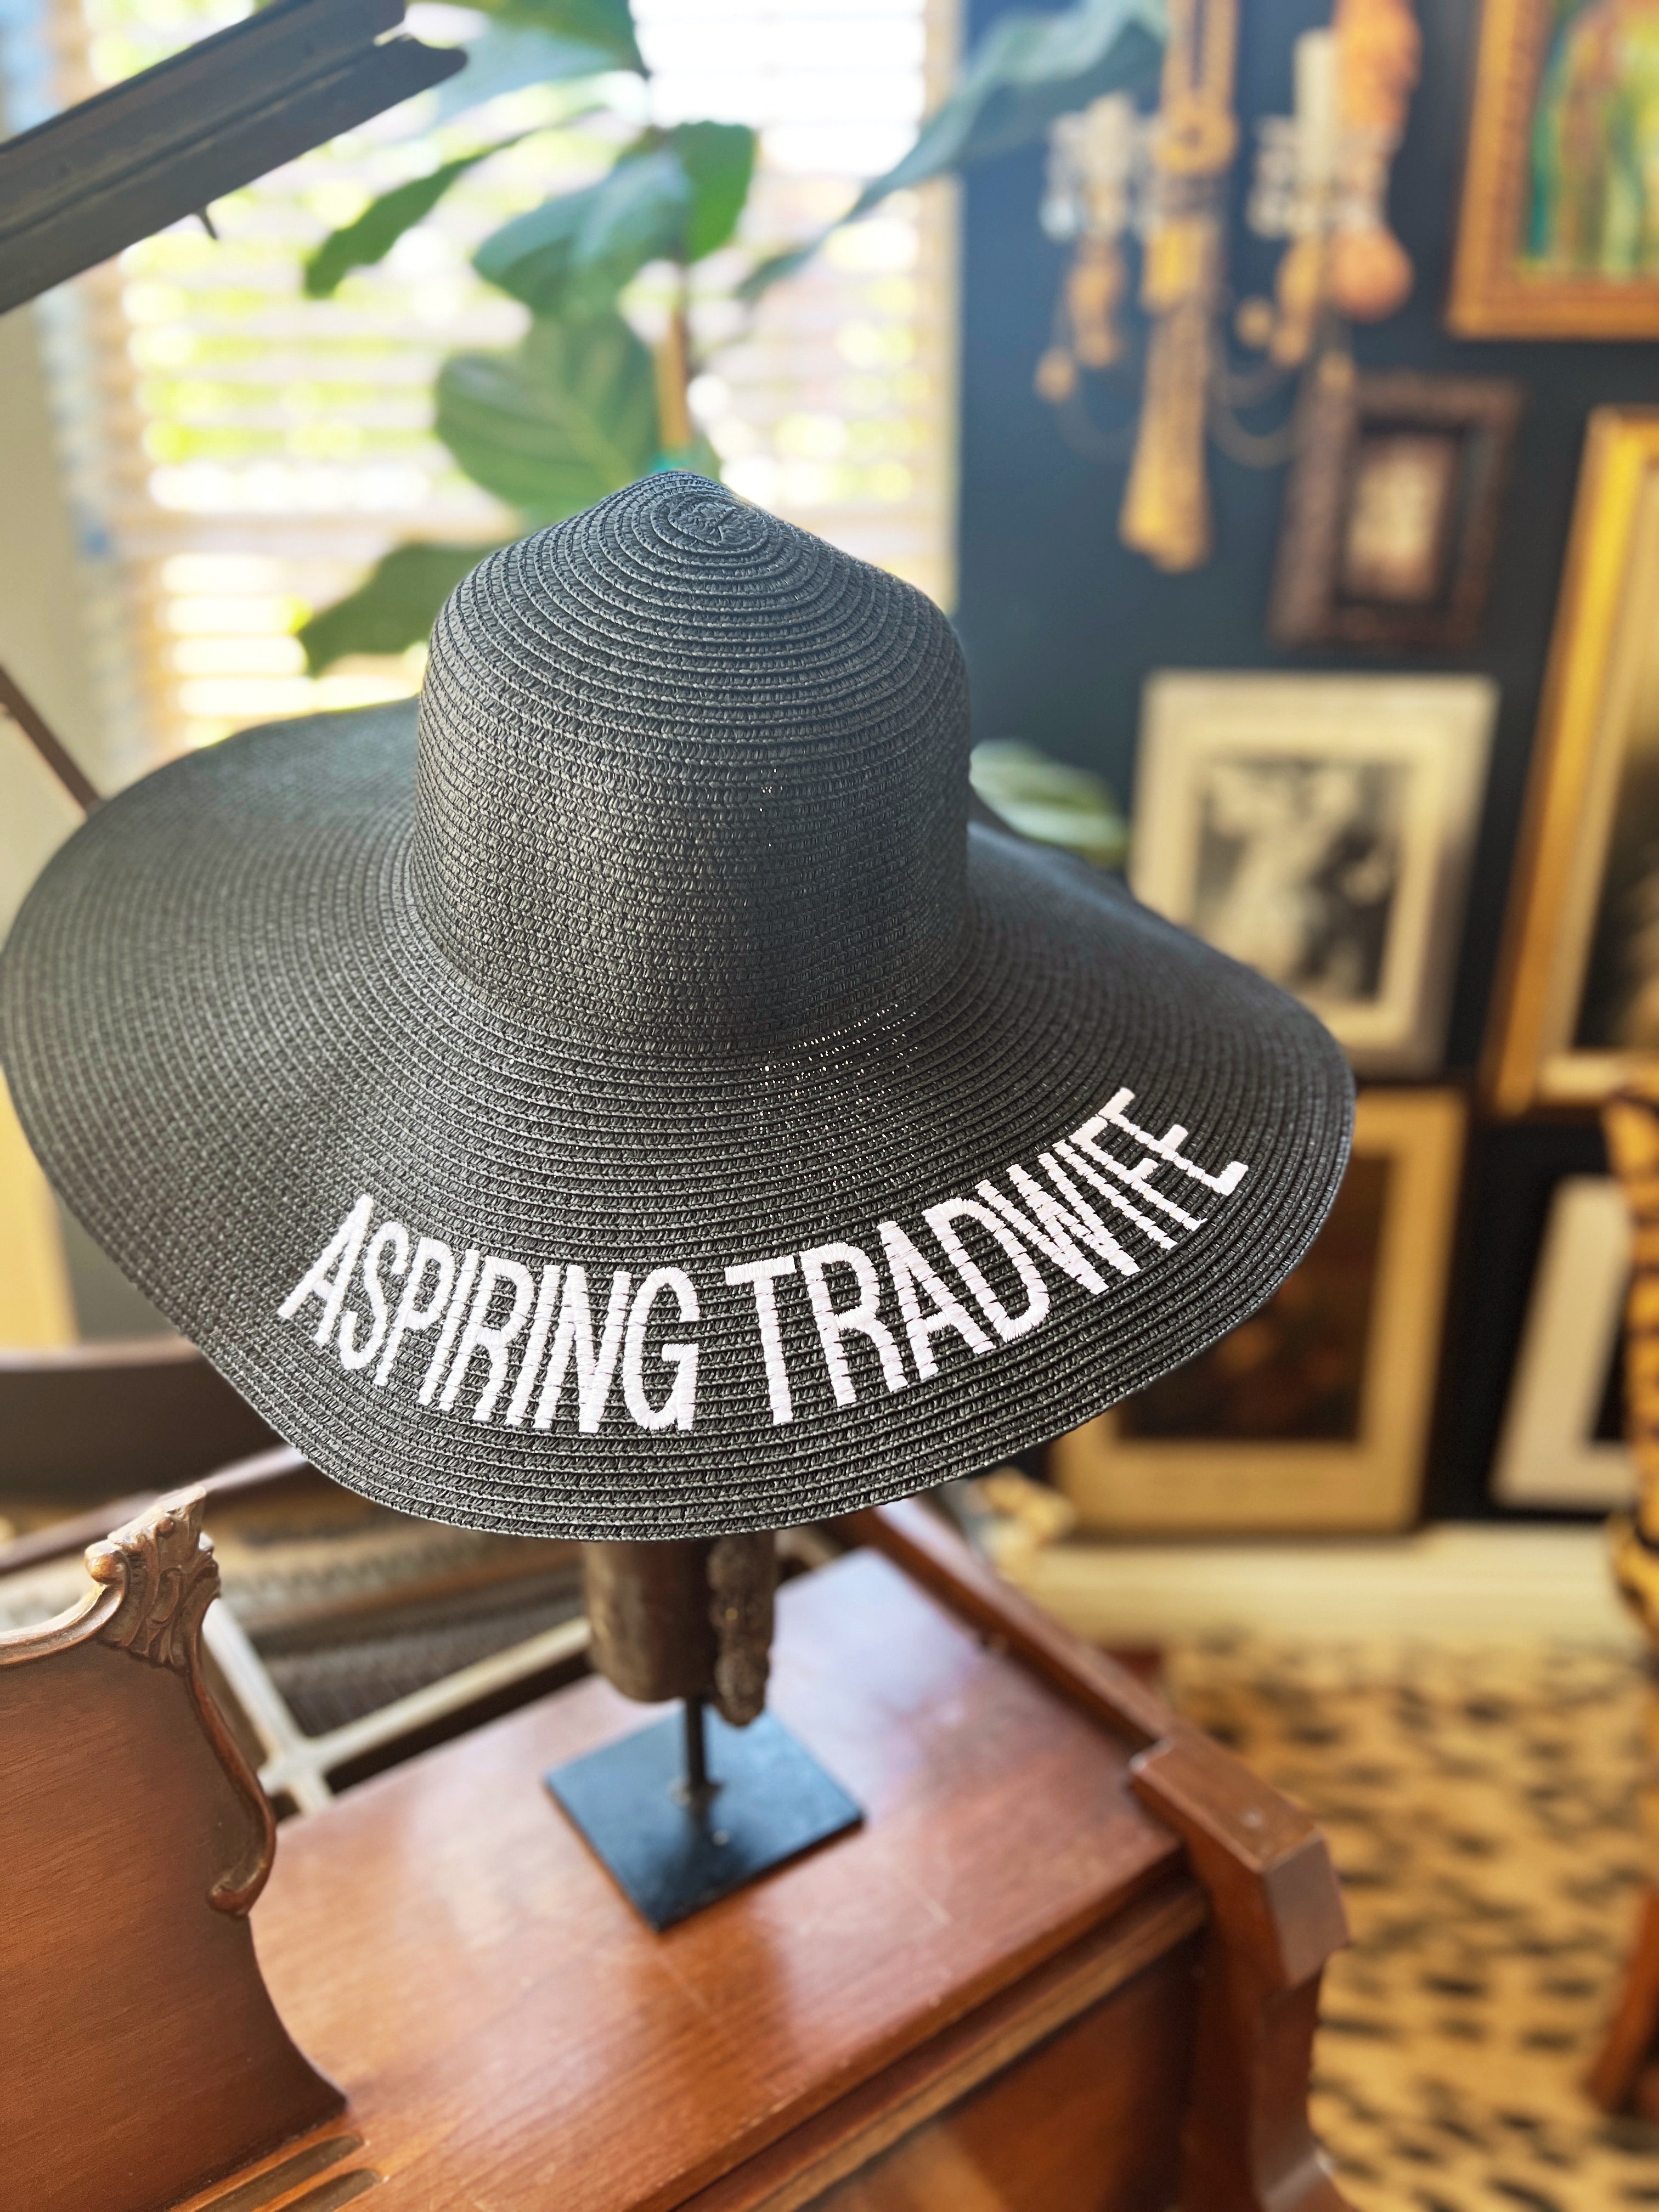 « ASPIRING TRADWIFE » EMBROIDERED STRAW HAT